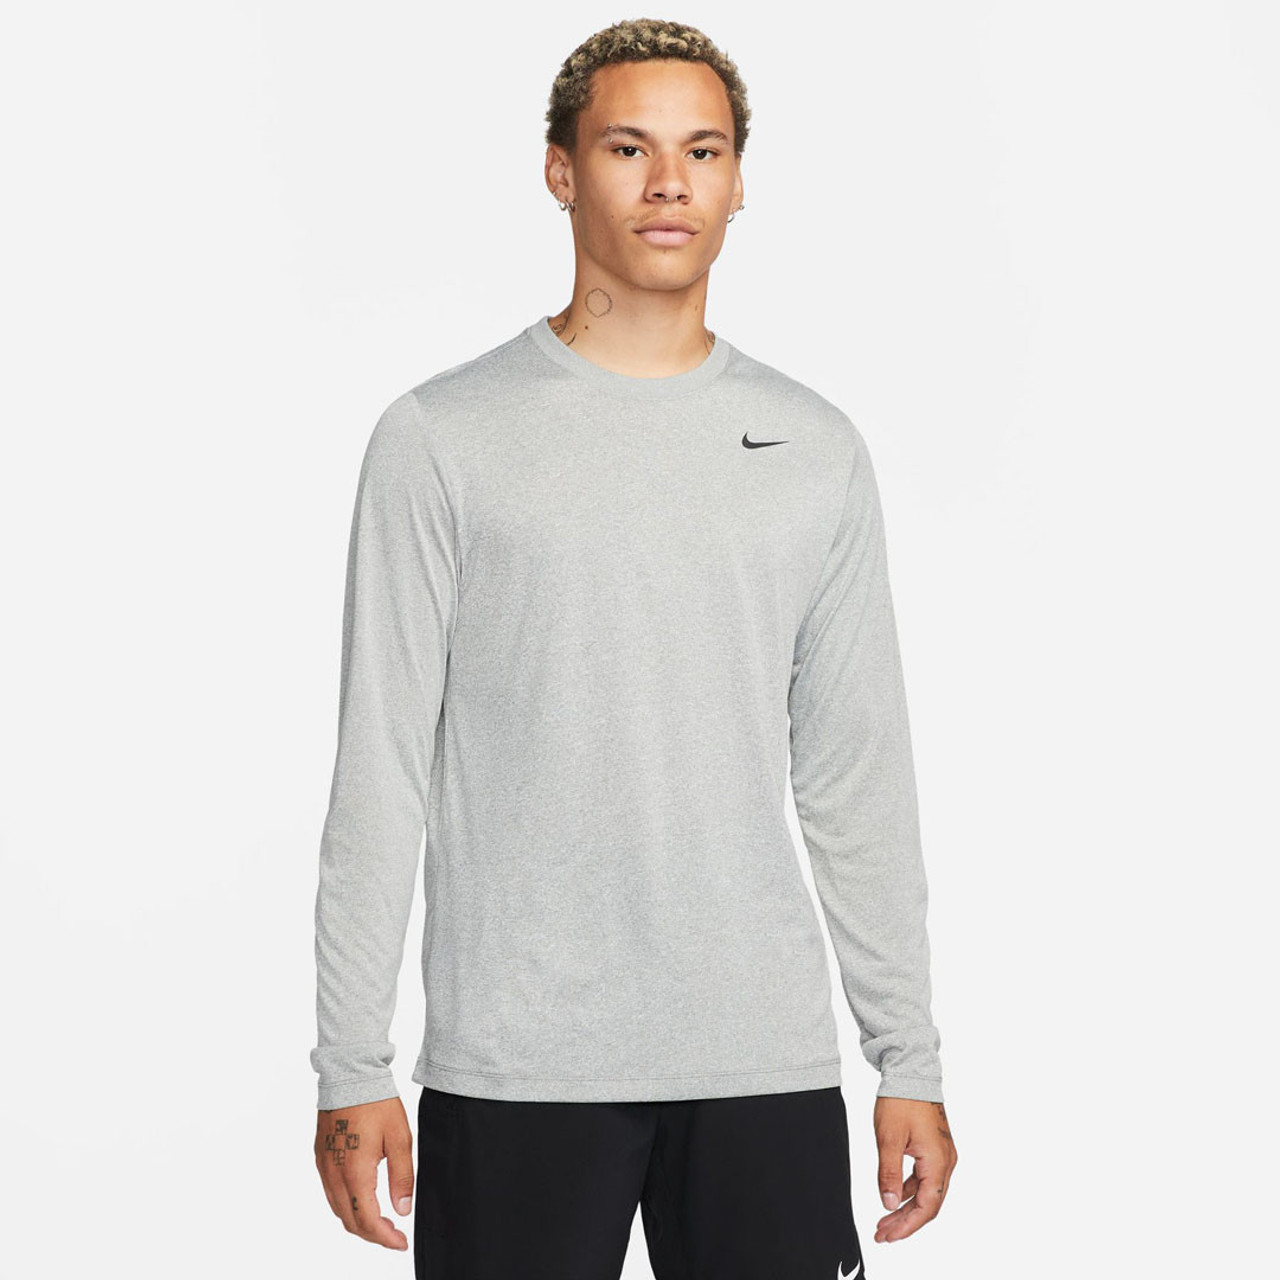 Nike Men's Dri-FIT Long-Sleeve Top $ 32 TYLER'S